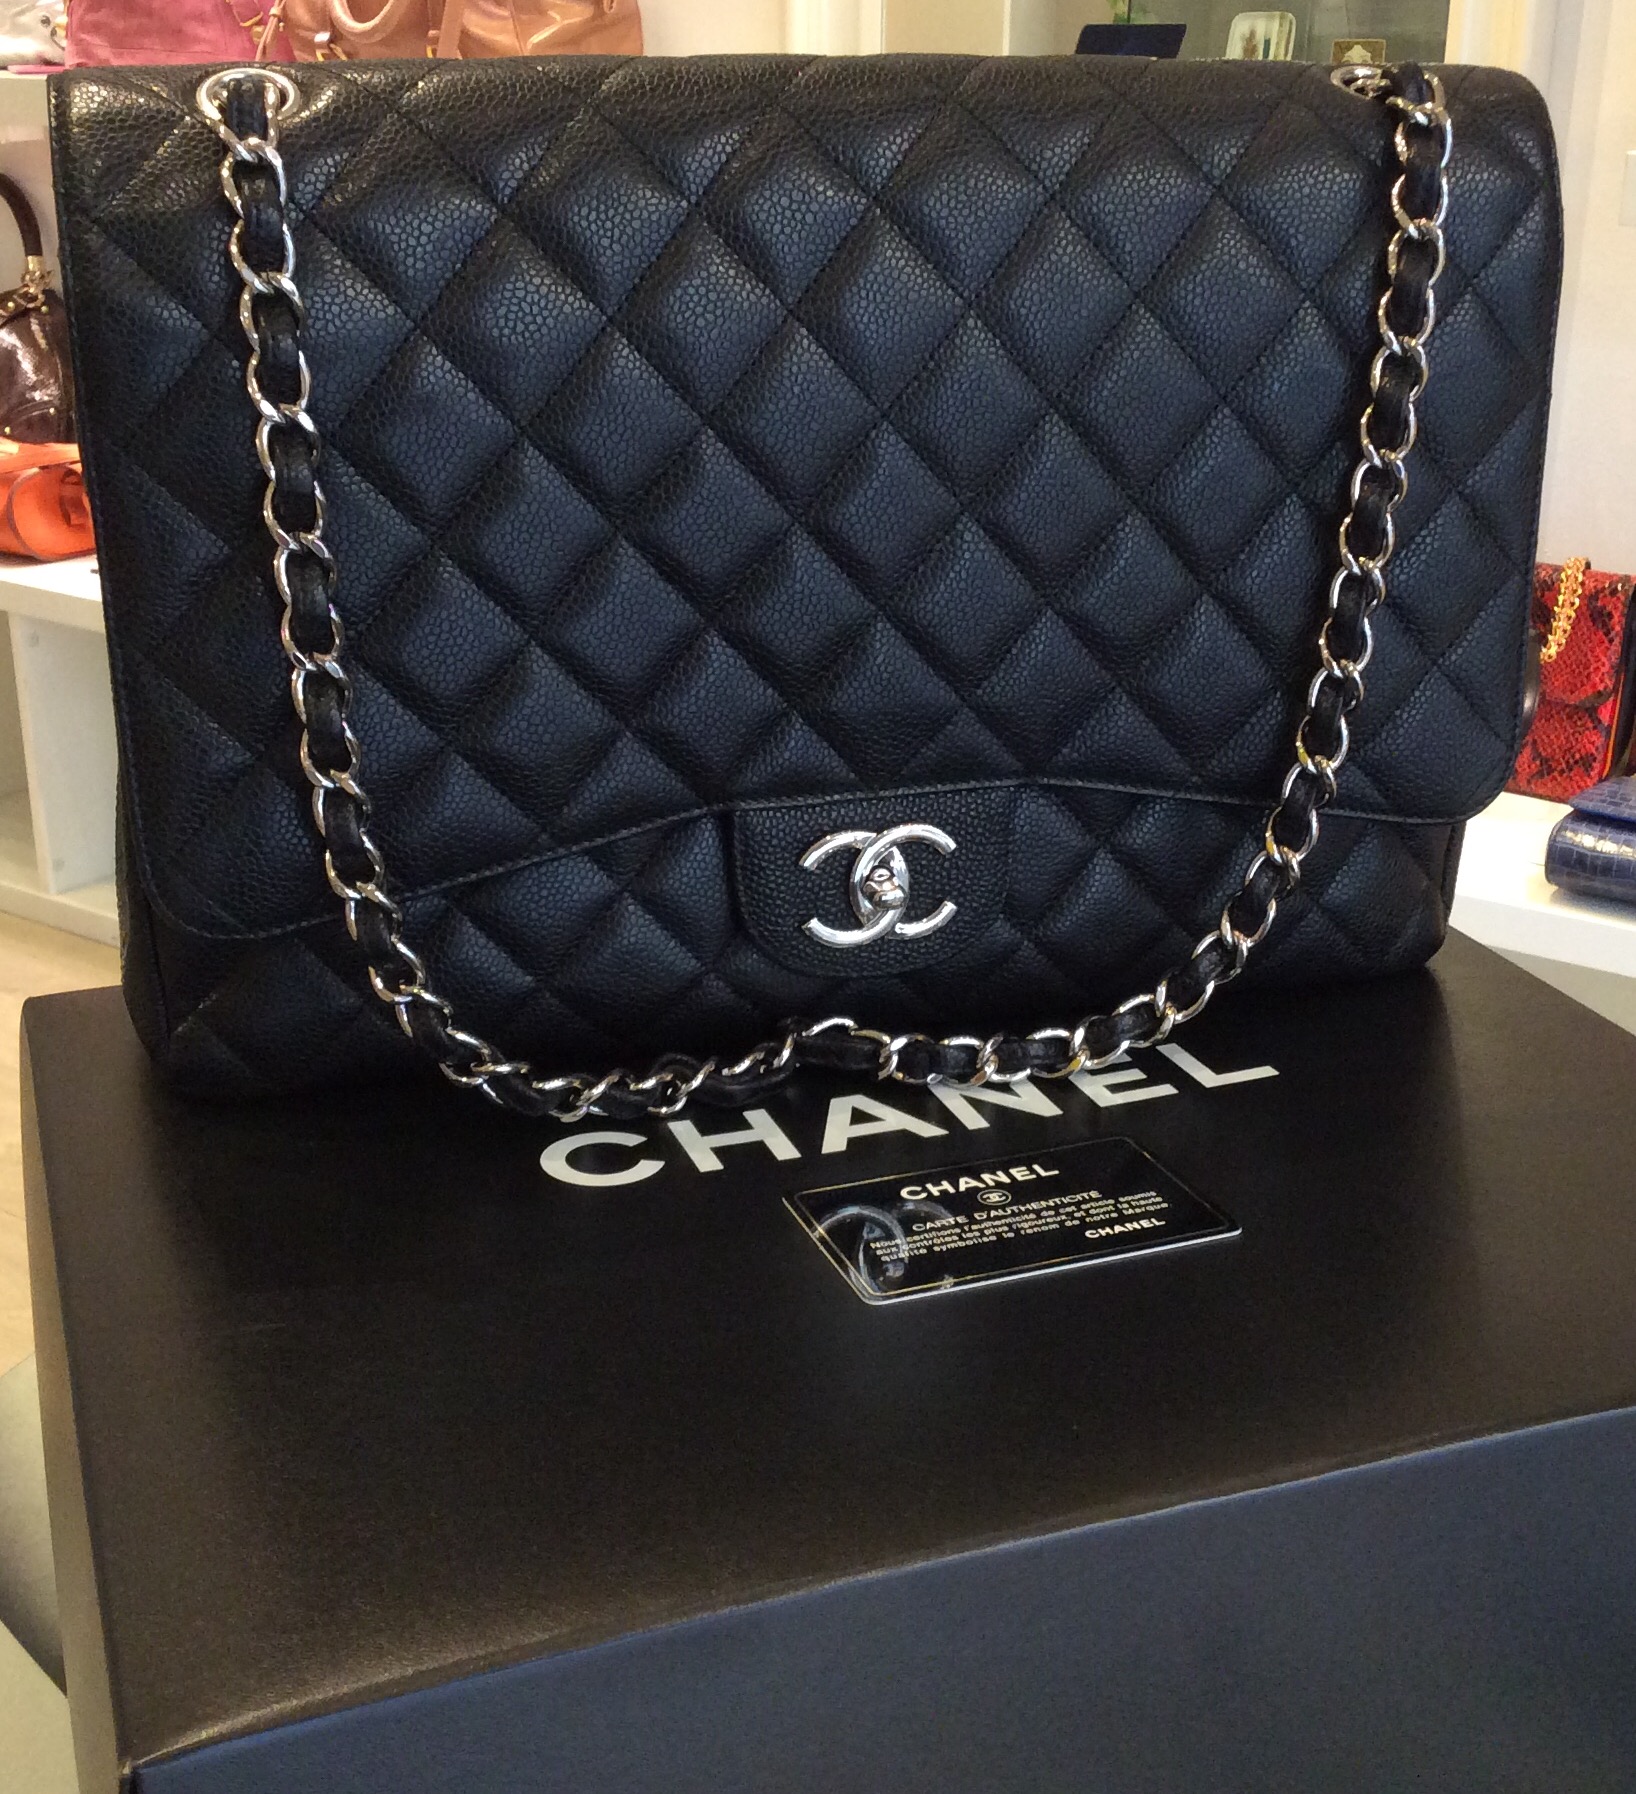 Сумка шанель карман улыбка. Шанель 2.55. Chanel 2.55 Maxi. Сумка Шанель 2.55. Chanel Bag 2.55 Maxi Size.